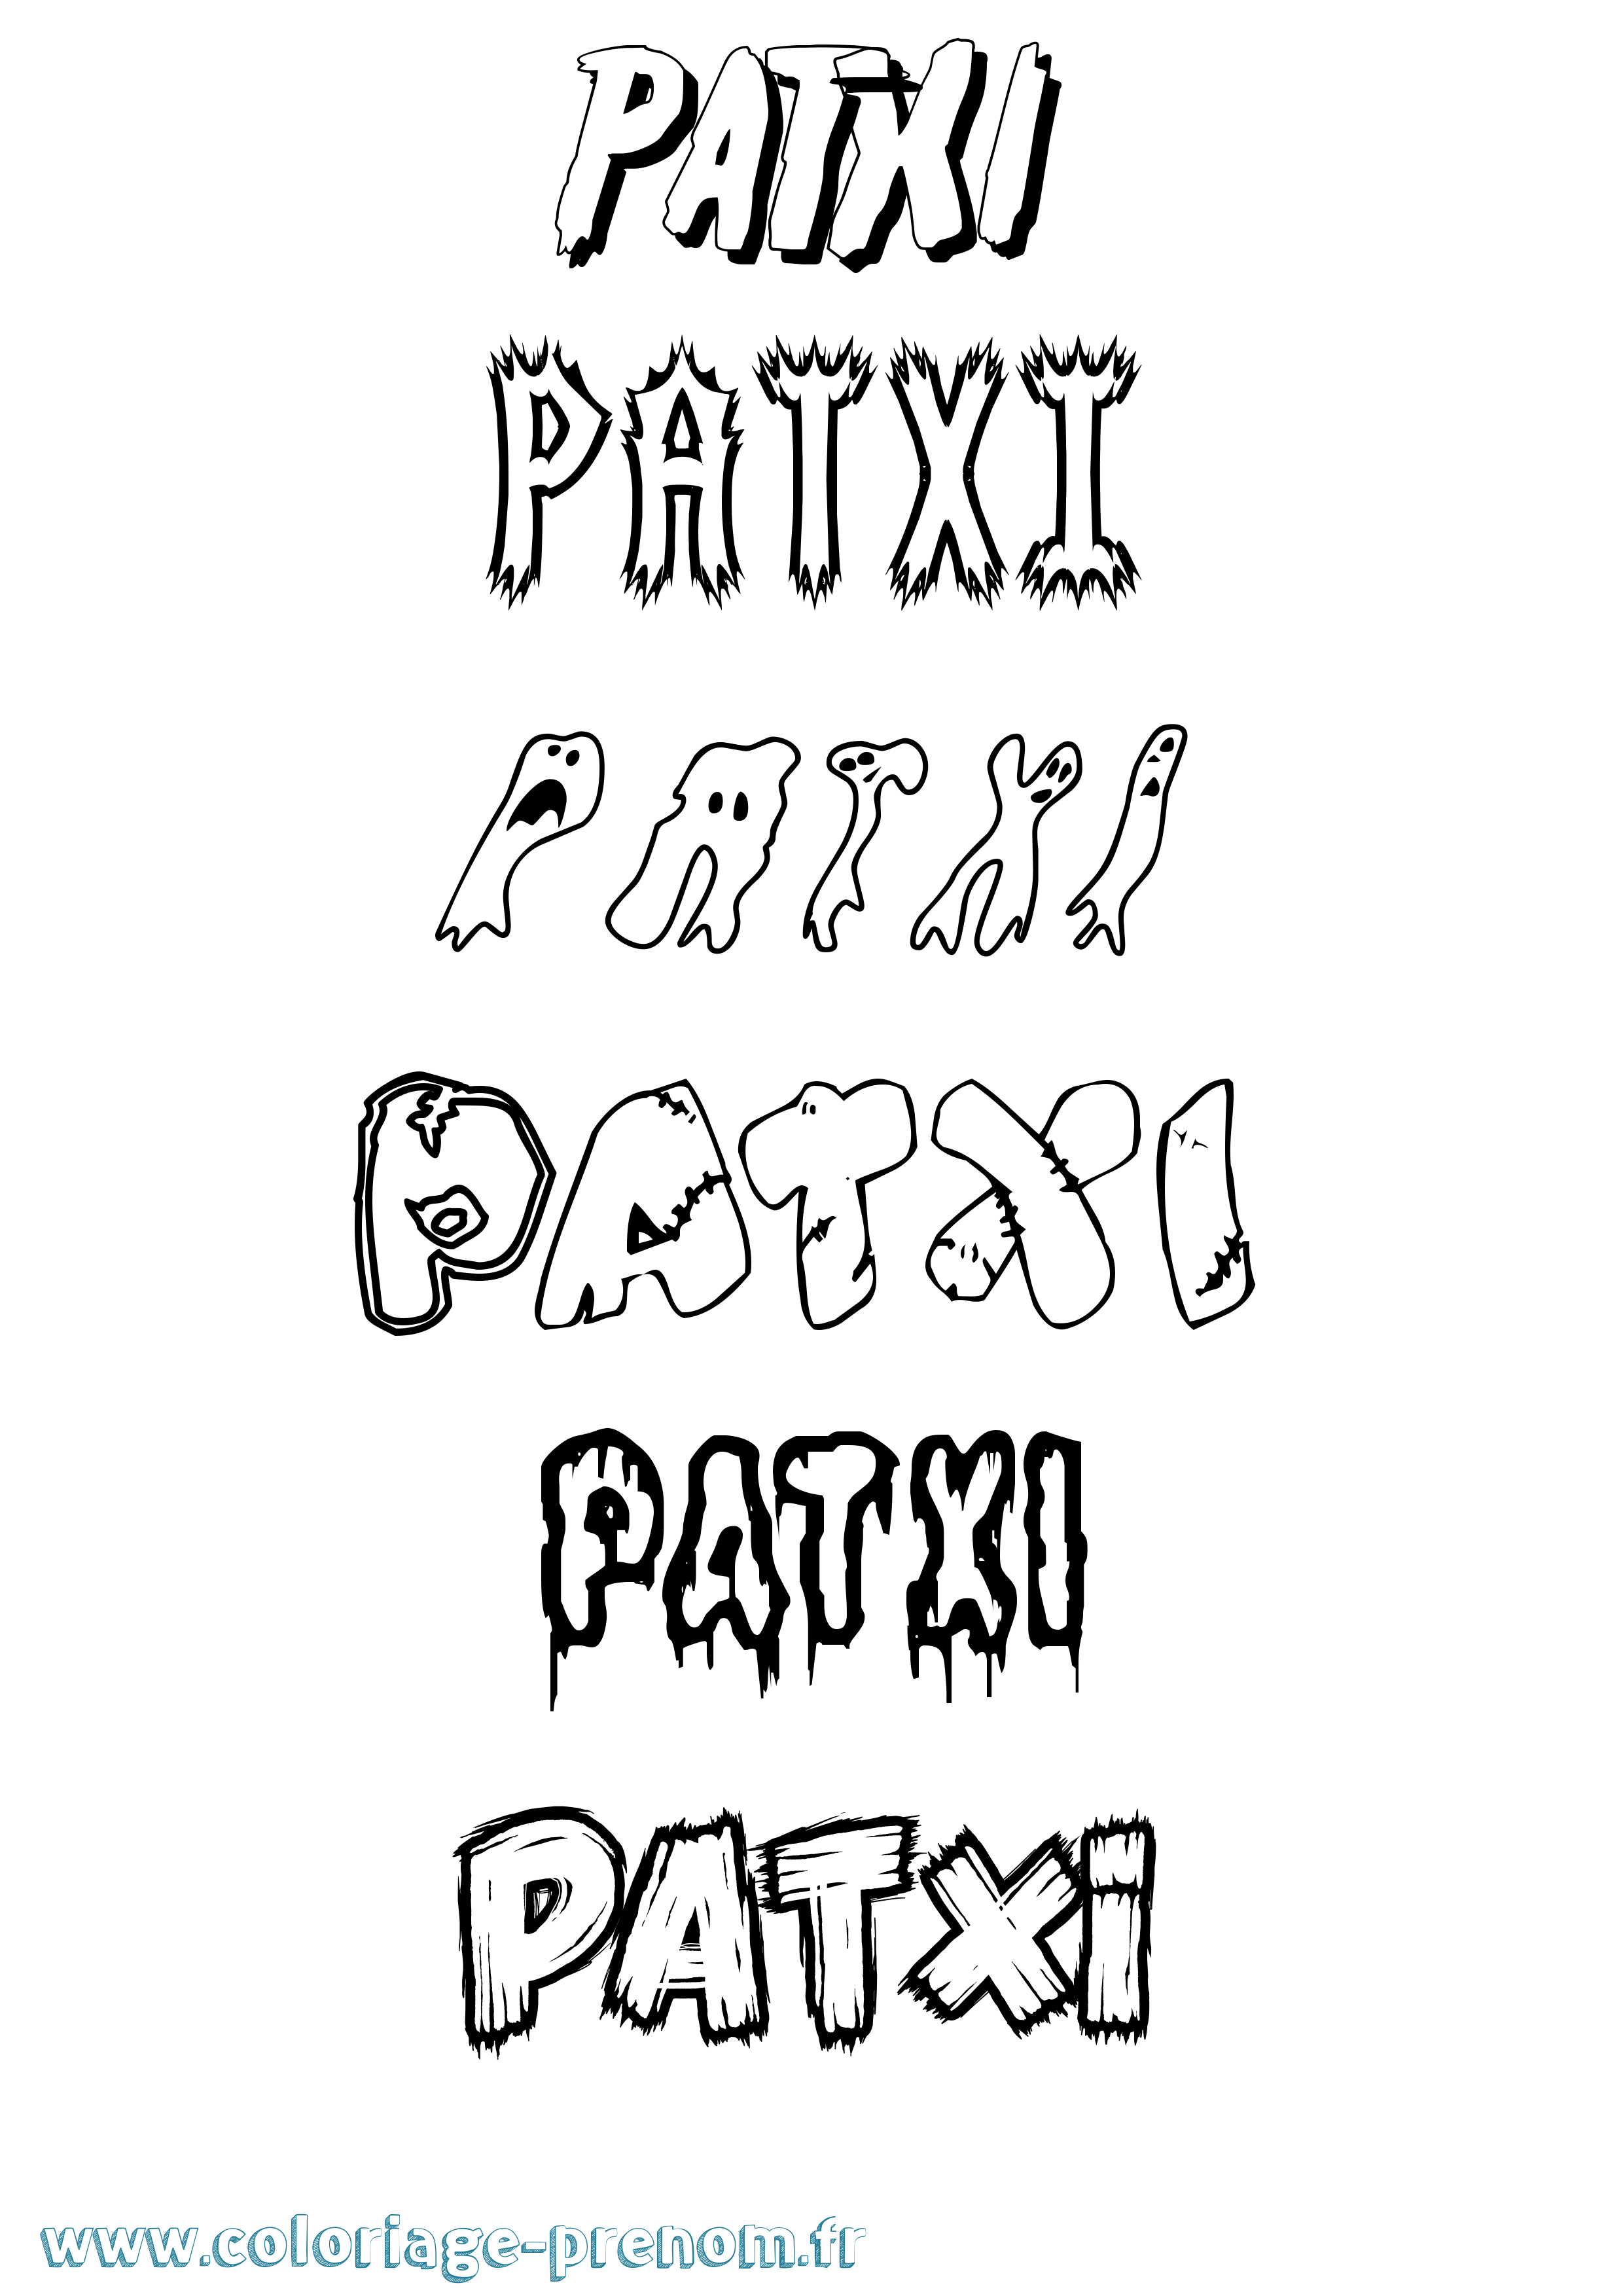 Coloriage prénom Patxi Frisson